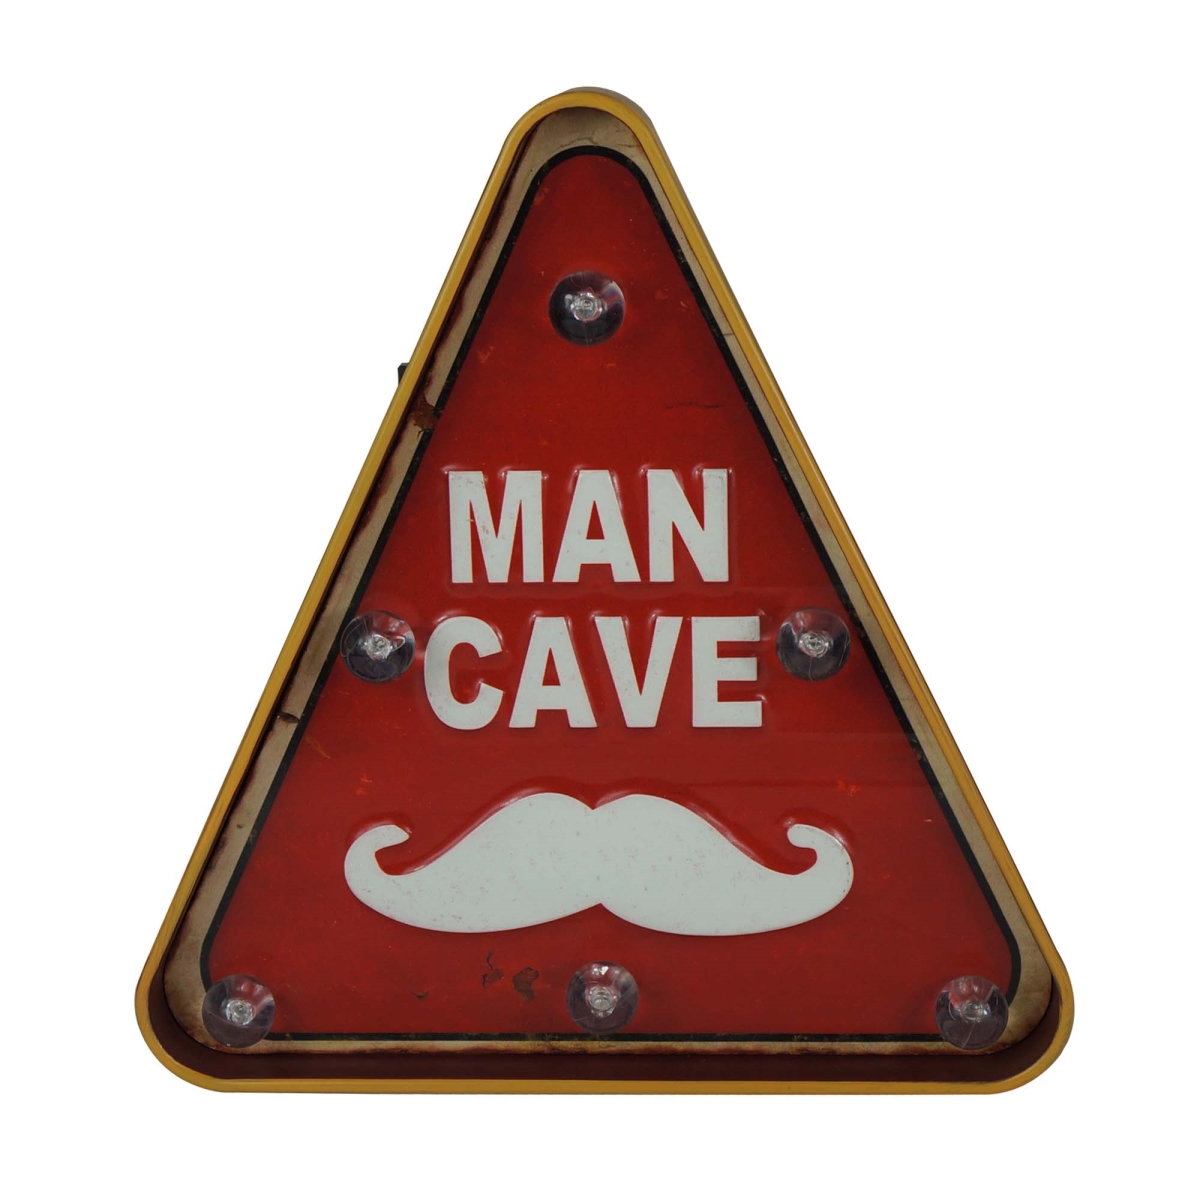 Bm-jd1785 Led Lighted Man Cave Metal Wall Decor